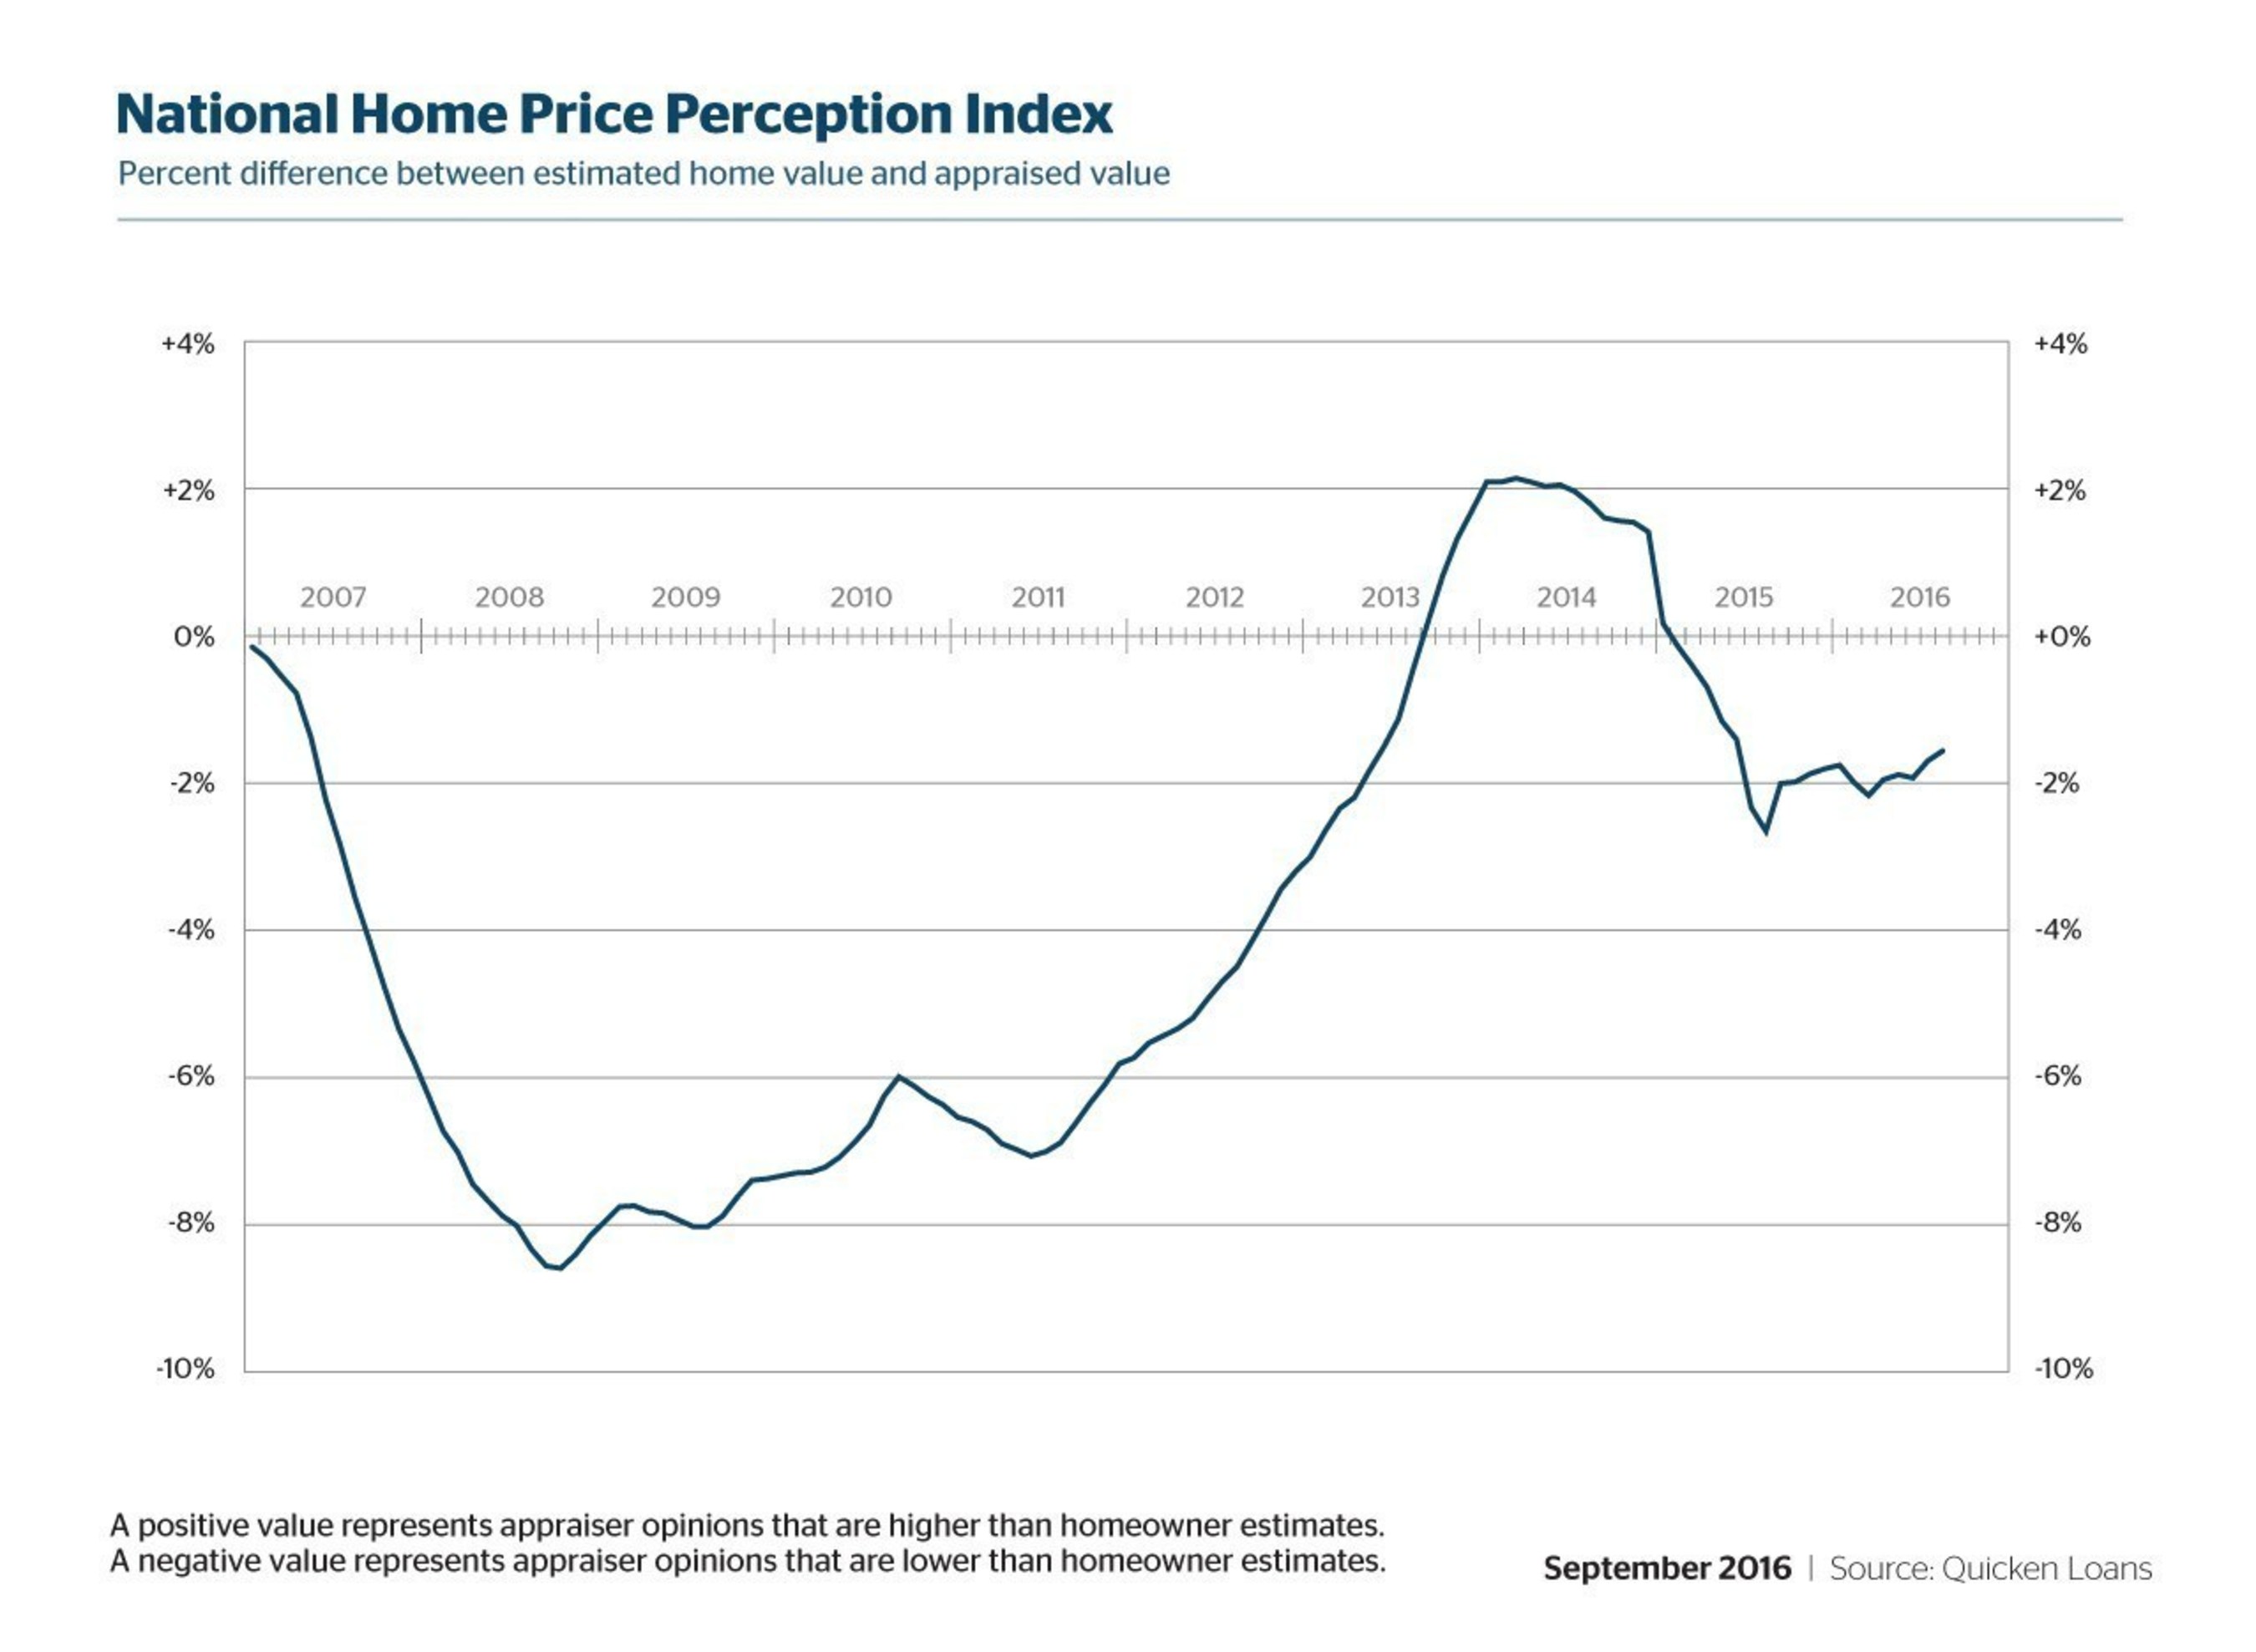 Quicken Loans' Home Price Perception Index (HPPI)